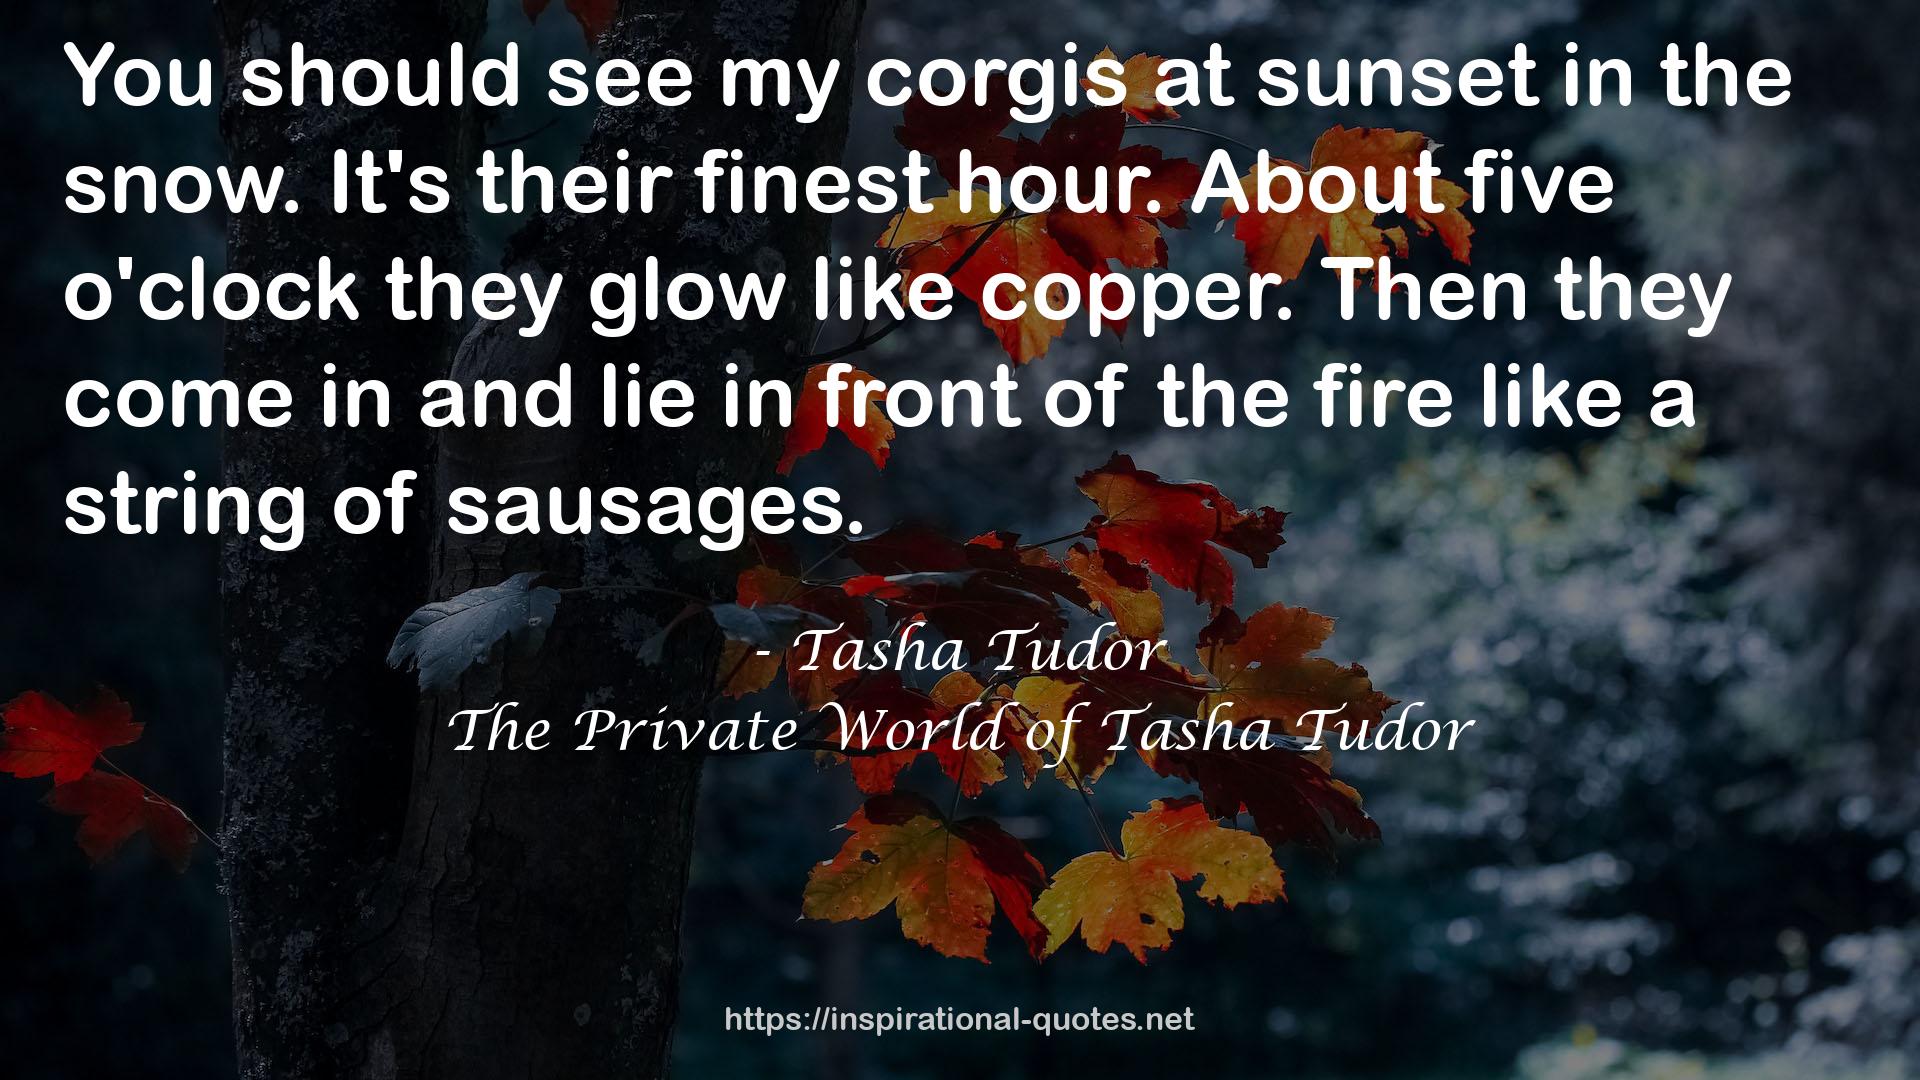 The Private World of Tasha Tudor QUOTES